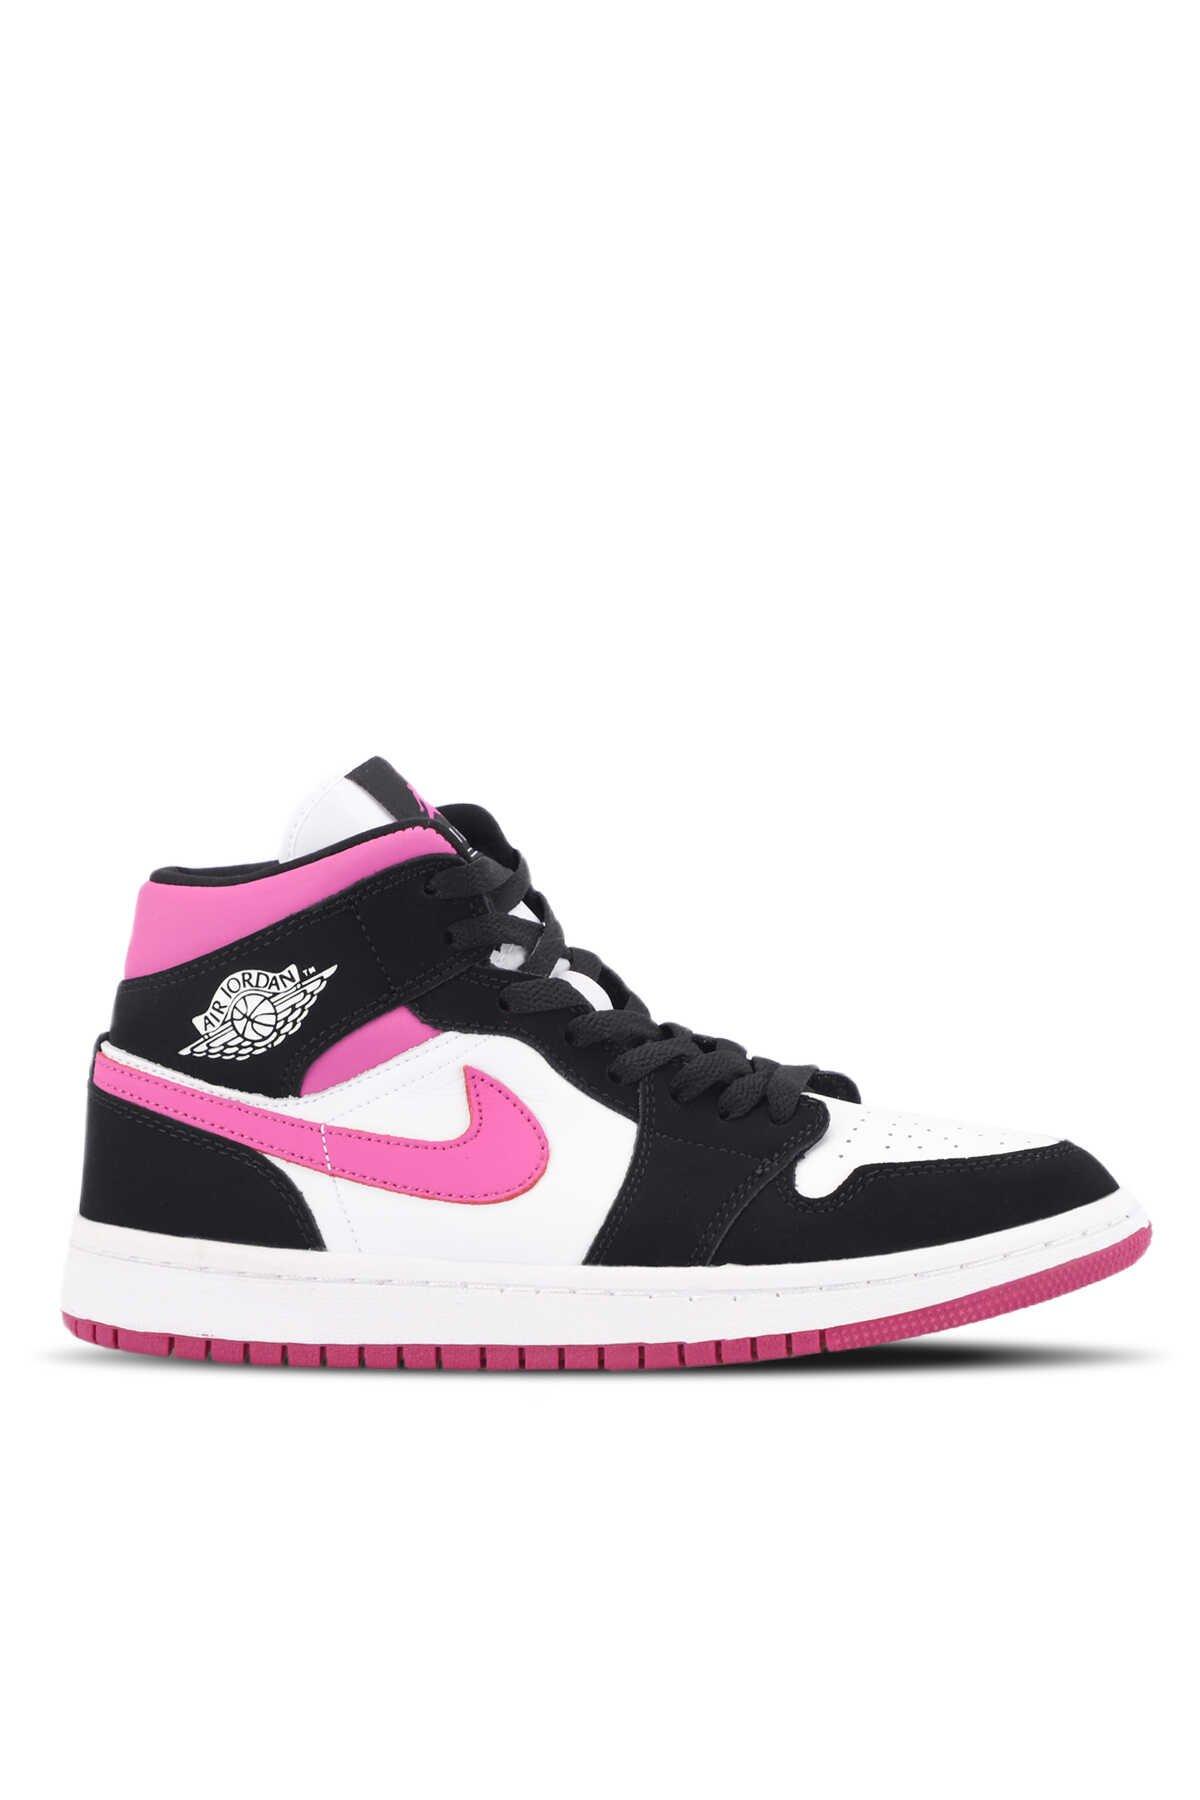 Nike - Nike AIR JORDON 1 MID Sneaker Kadın Ayakkabı Siyah / Pembe